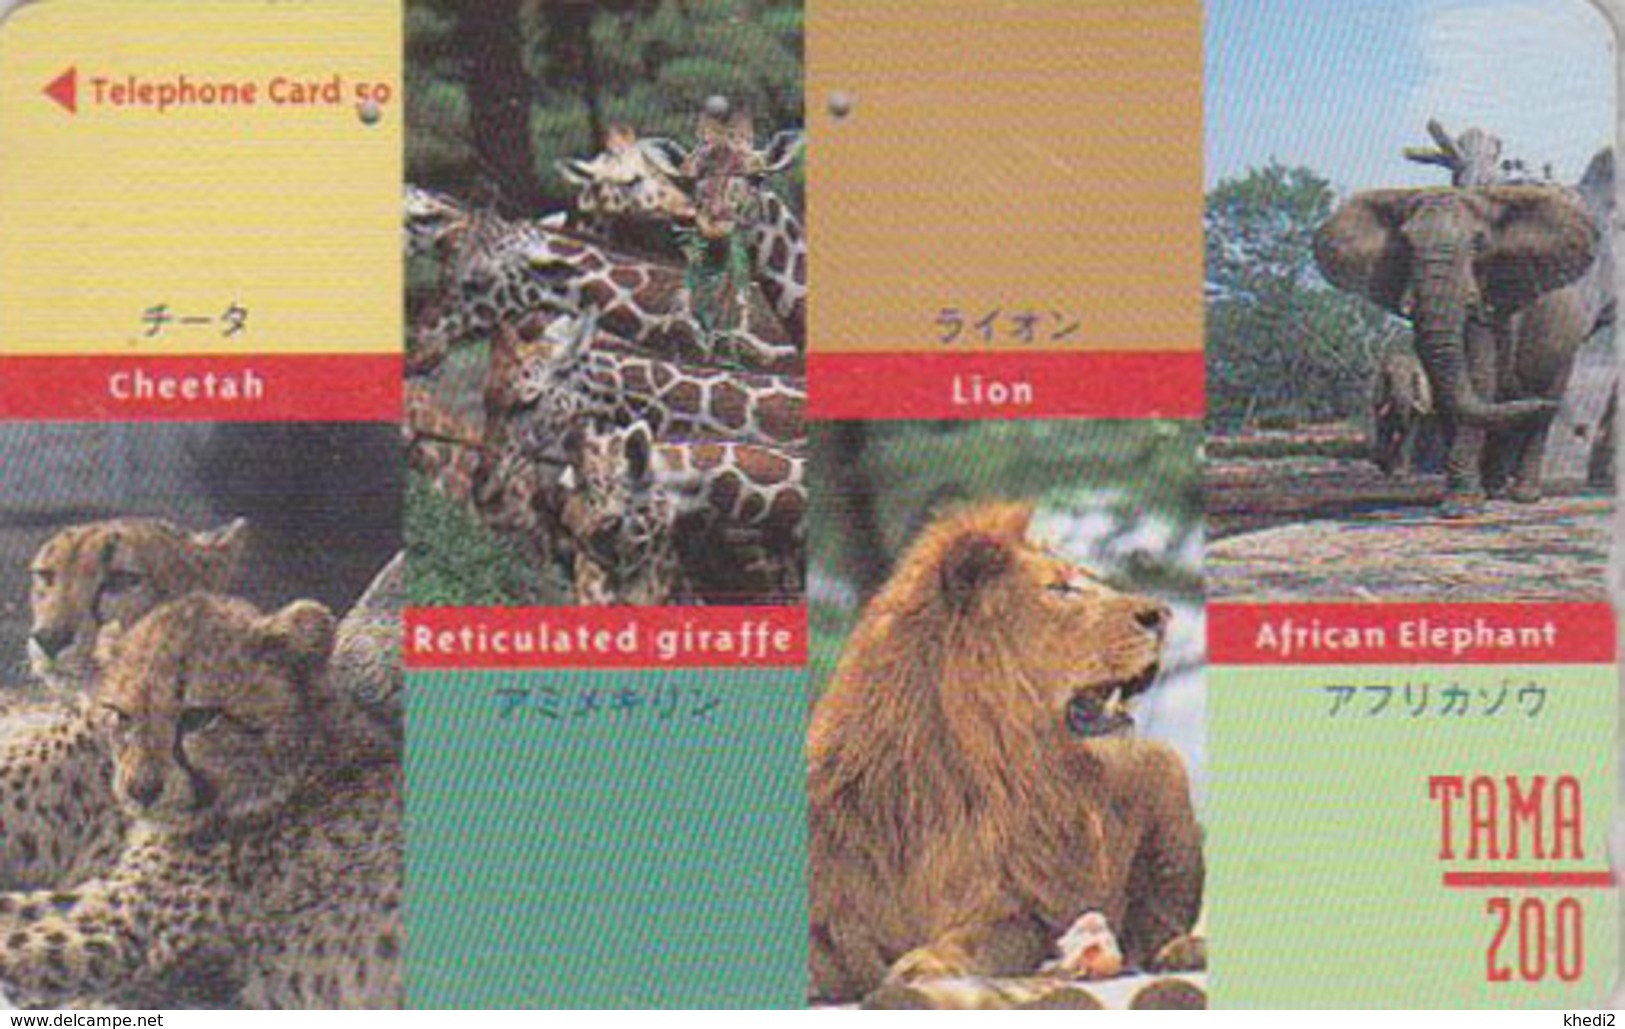 Télécarte Japon / 110-175035 - Série TAMA ZOO - ANIMAL - ELEPHANT GIRAFE LION GUEPARD - GIRAFFE CHEETAH JAPAN Phonecard - Jungle